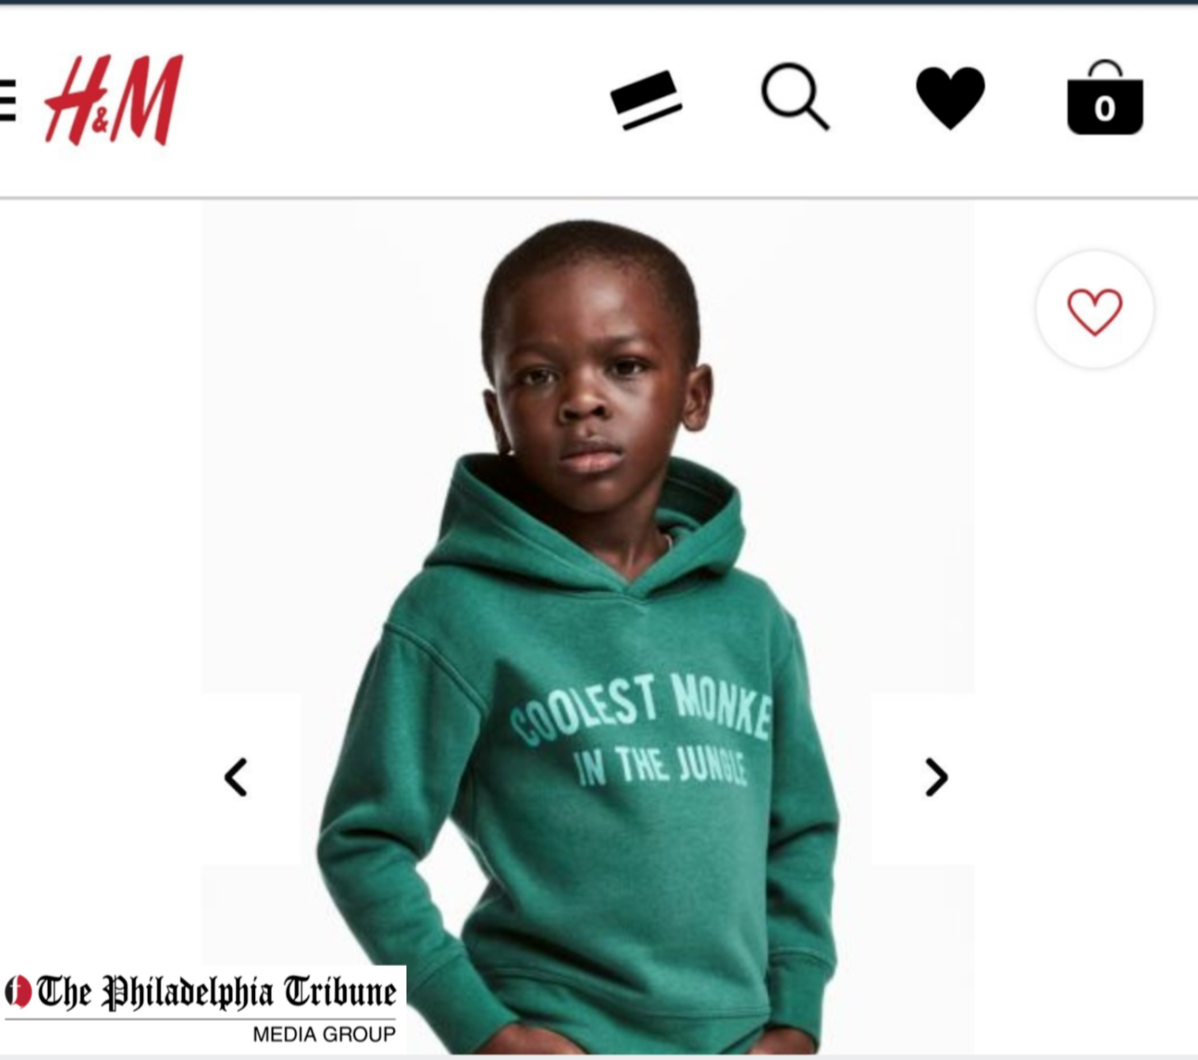 01/08/18: H&M pulls online ad with Black boy wearing ‘monkey’ shirt